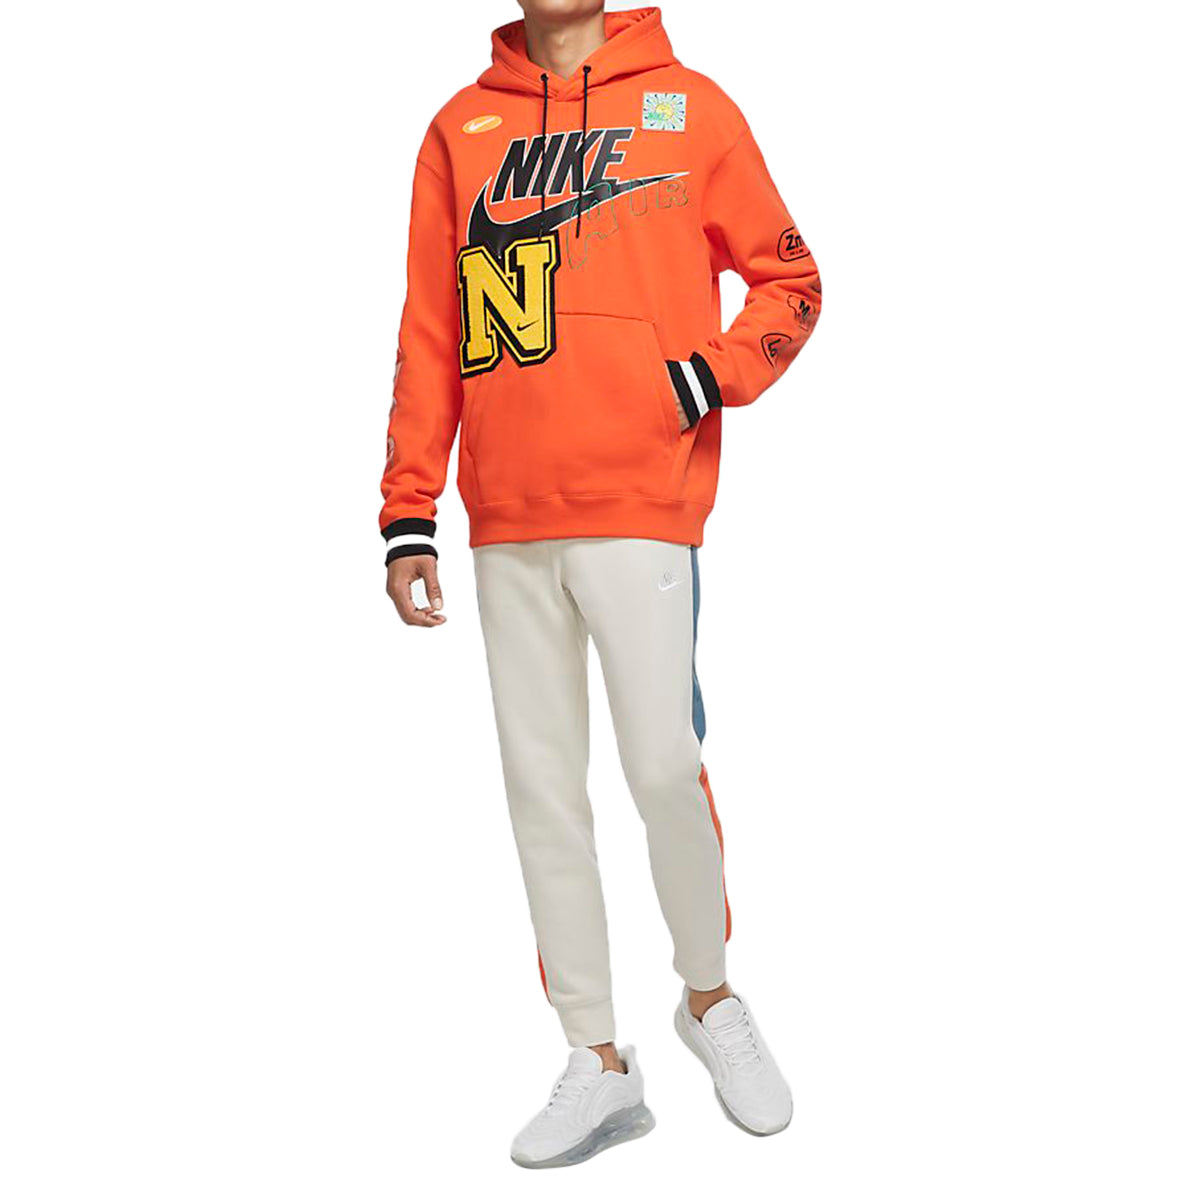 Nike Sportswear Pullover Hoodie Mens Style : Dc2722